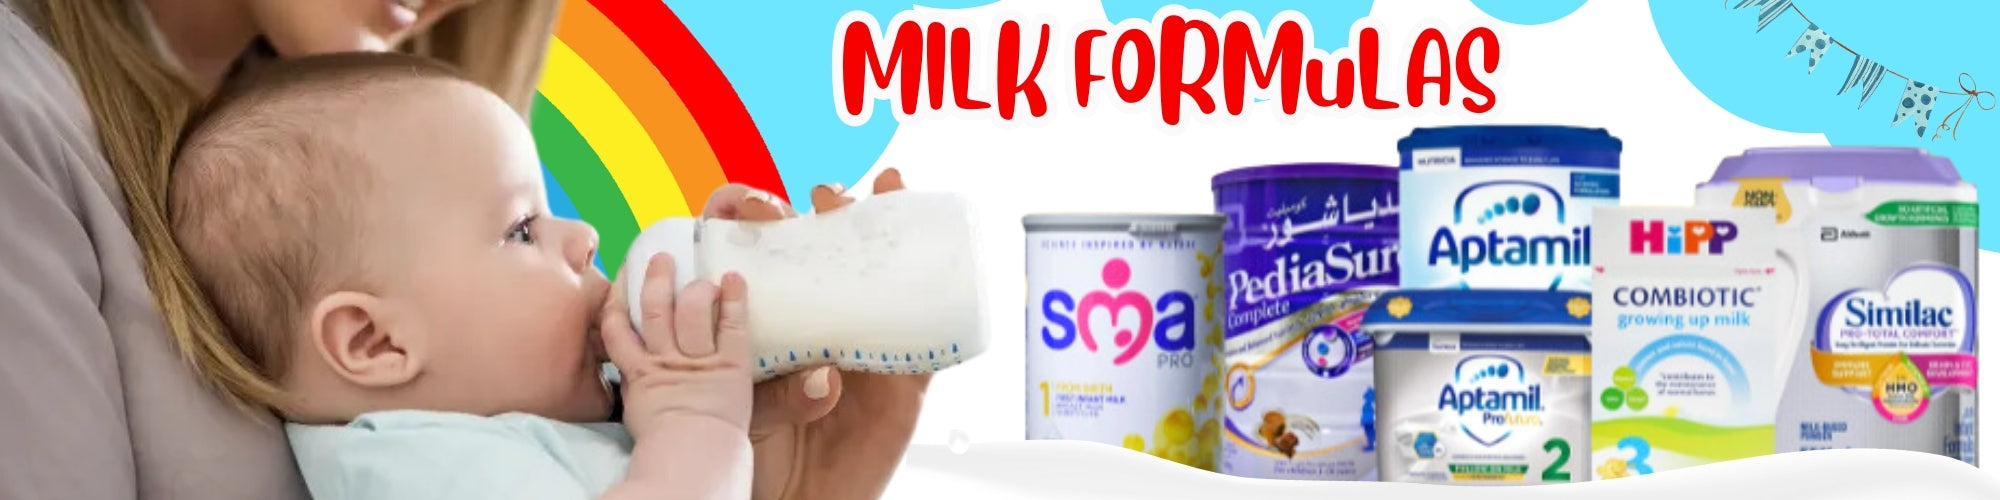 Milk formulas